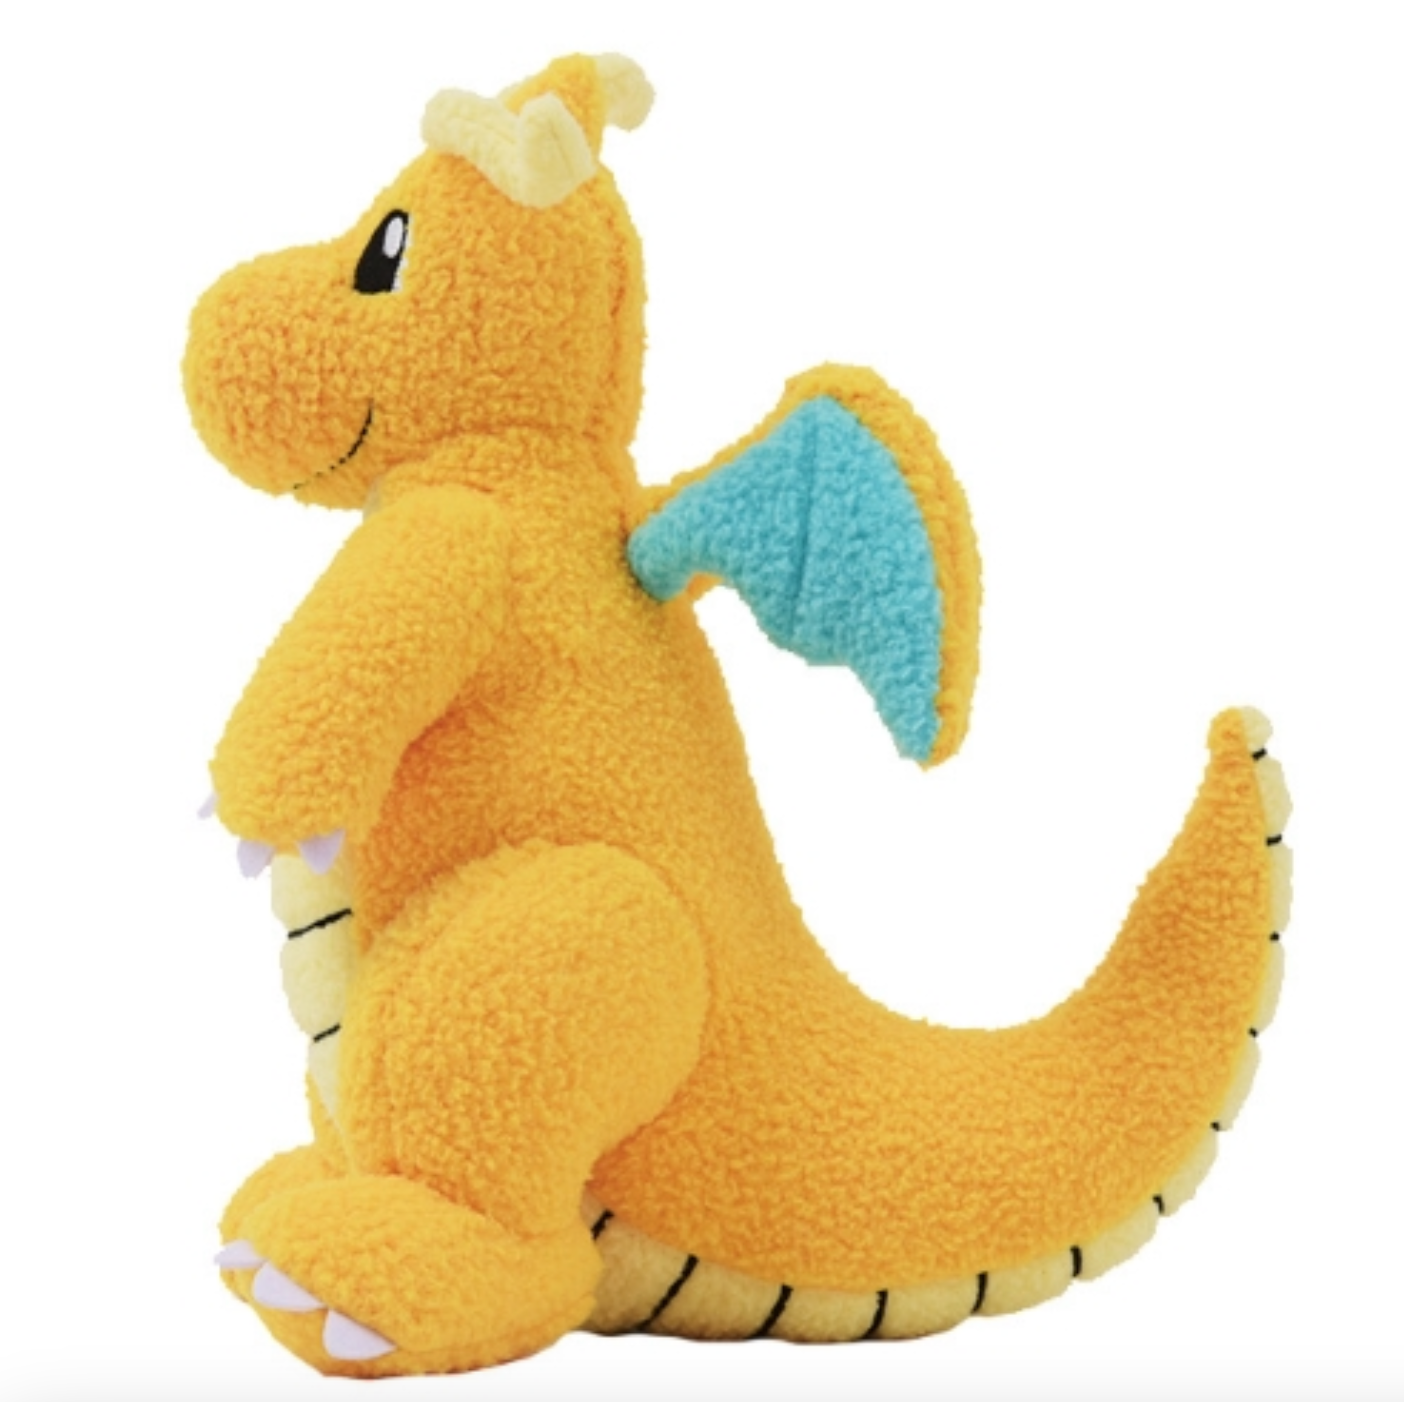 Pokemon Dragonite 12” Stuffed Animal Plush Doll Huge Cuddly Toy for Home Decoration Birthday Gift